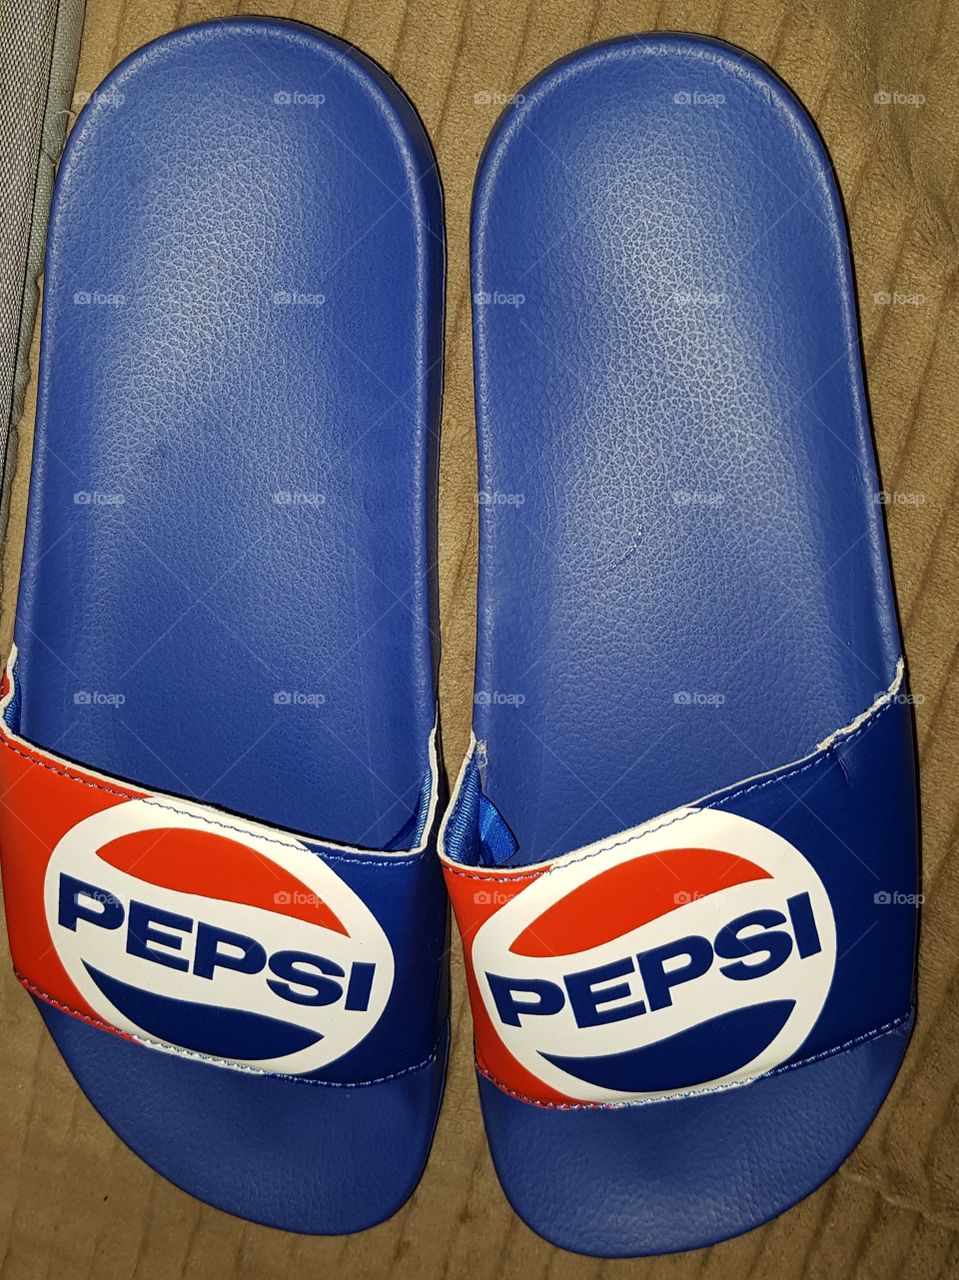 Pepsi wear